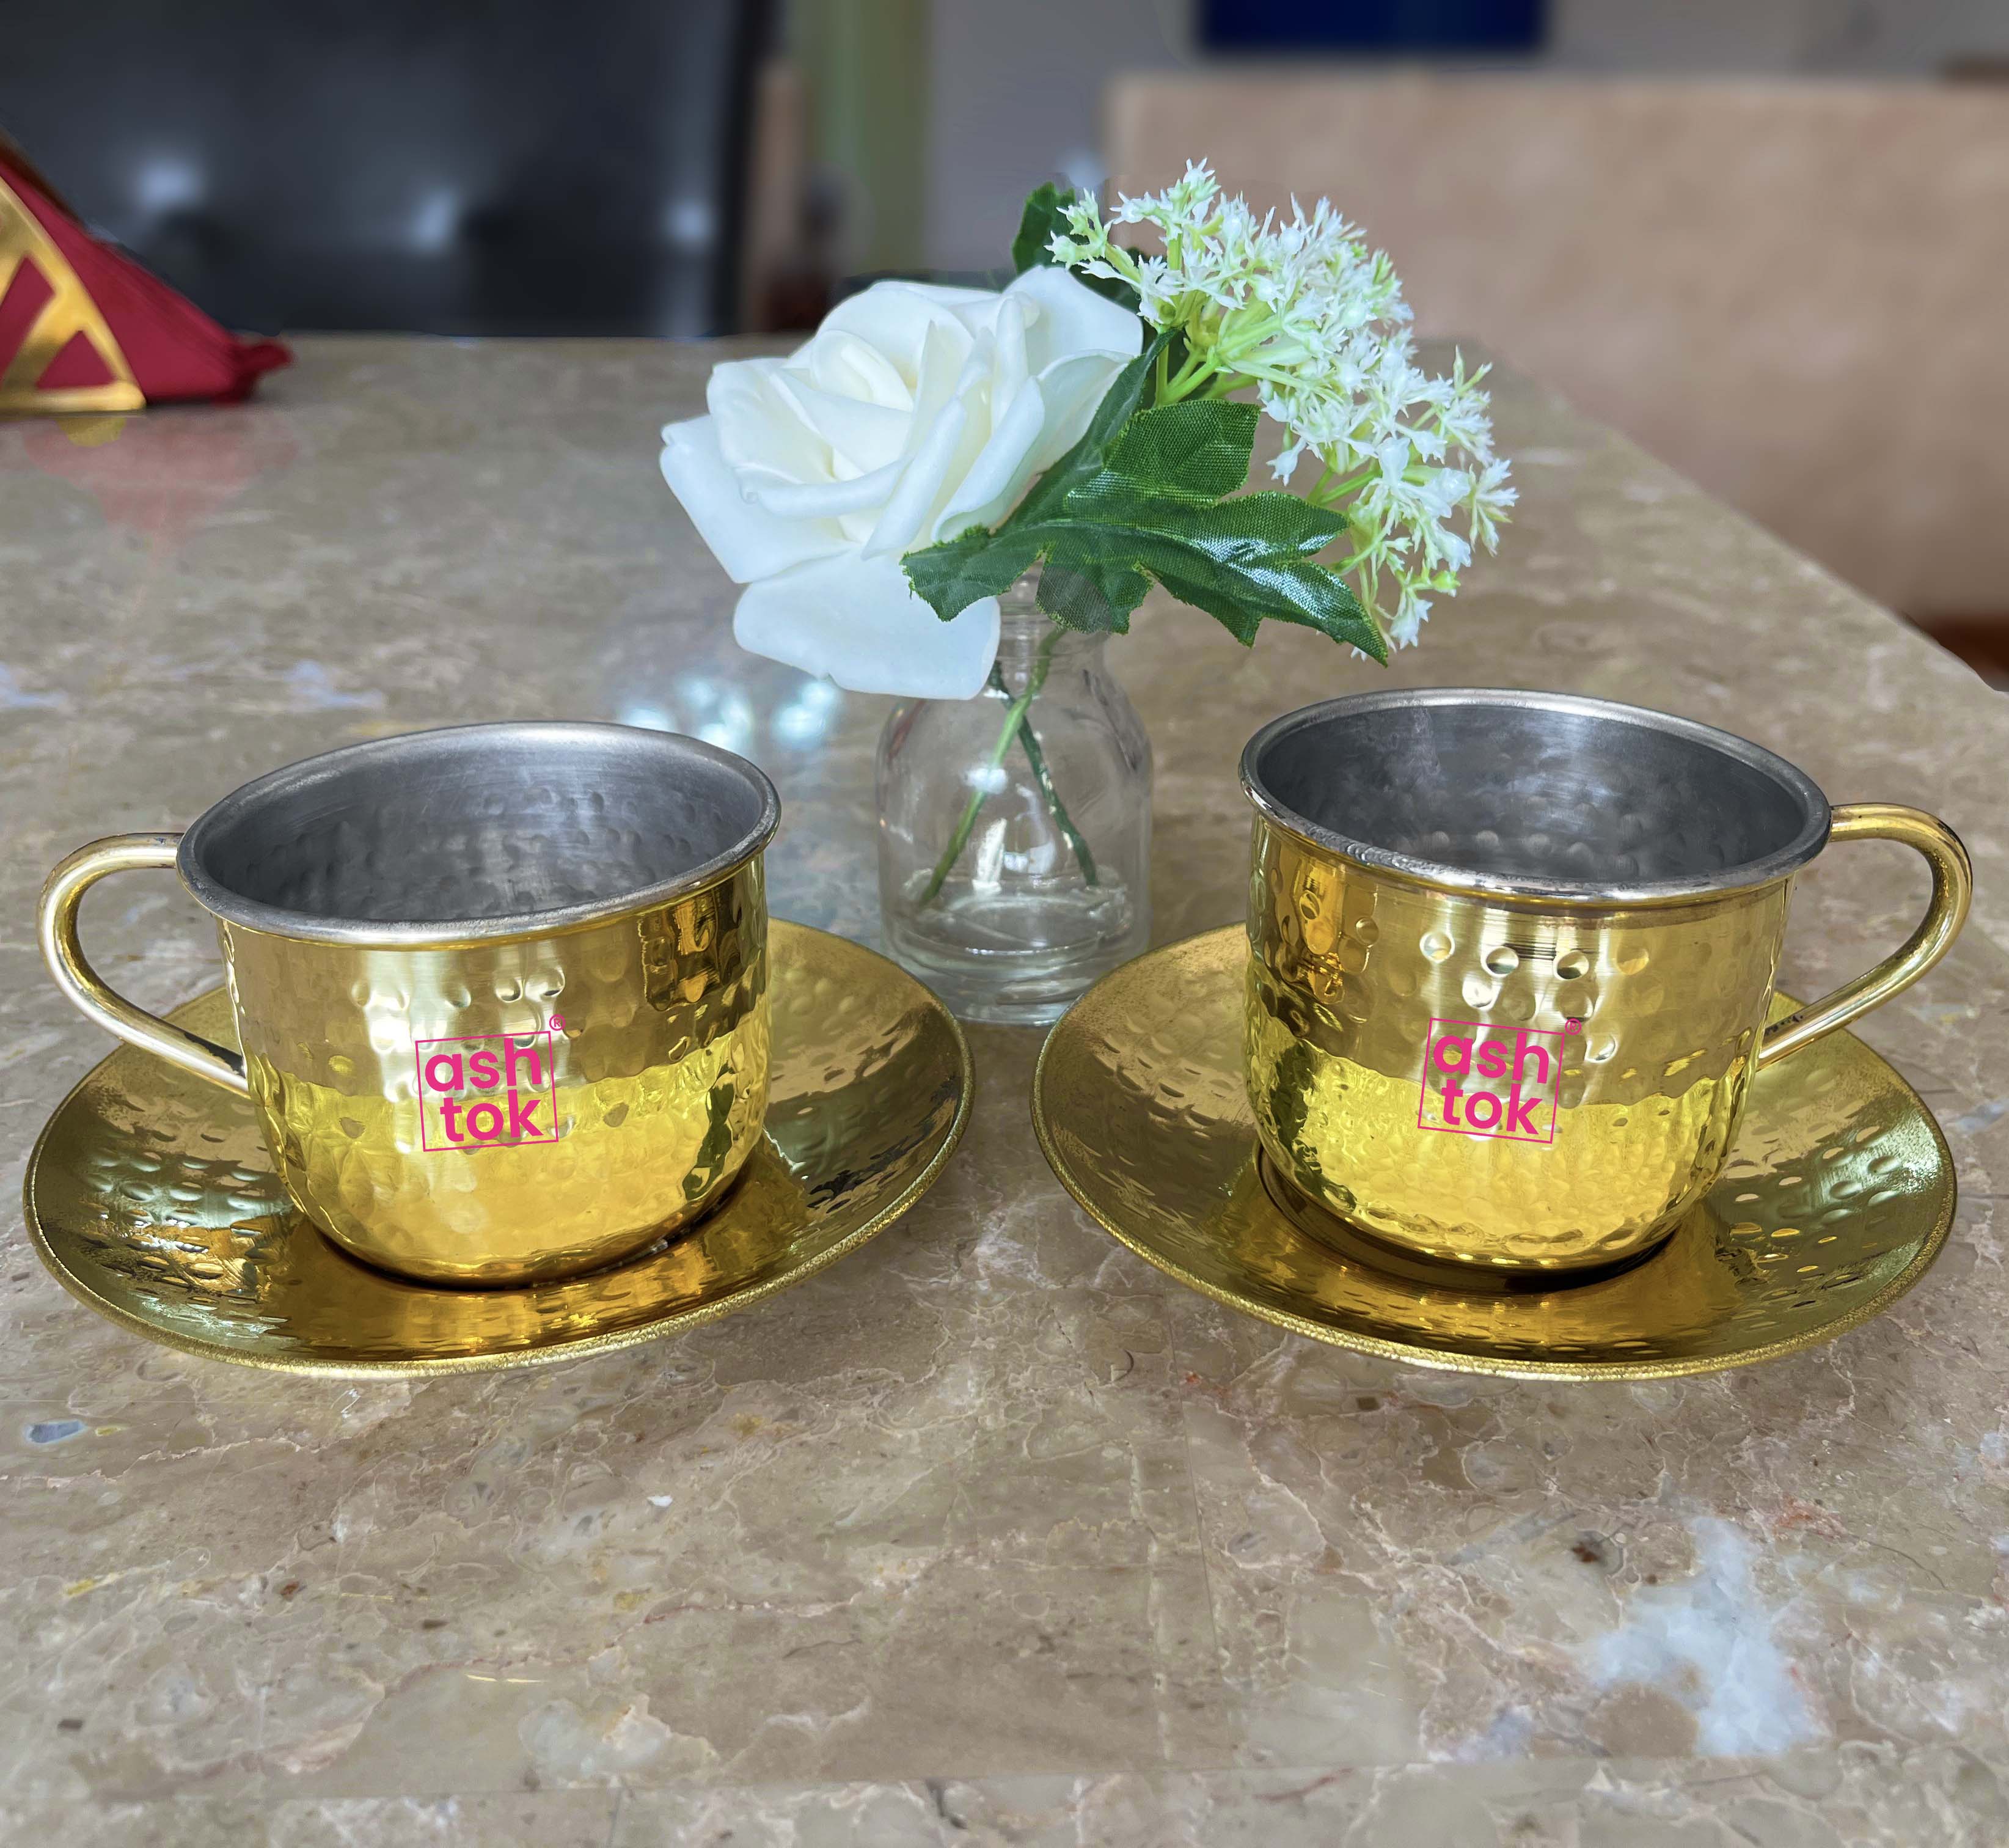 20 Pcs Cup Set,Ceramics Vintage Tea Cup Set Coffee Set with Metal